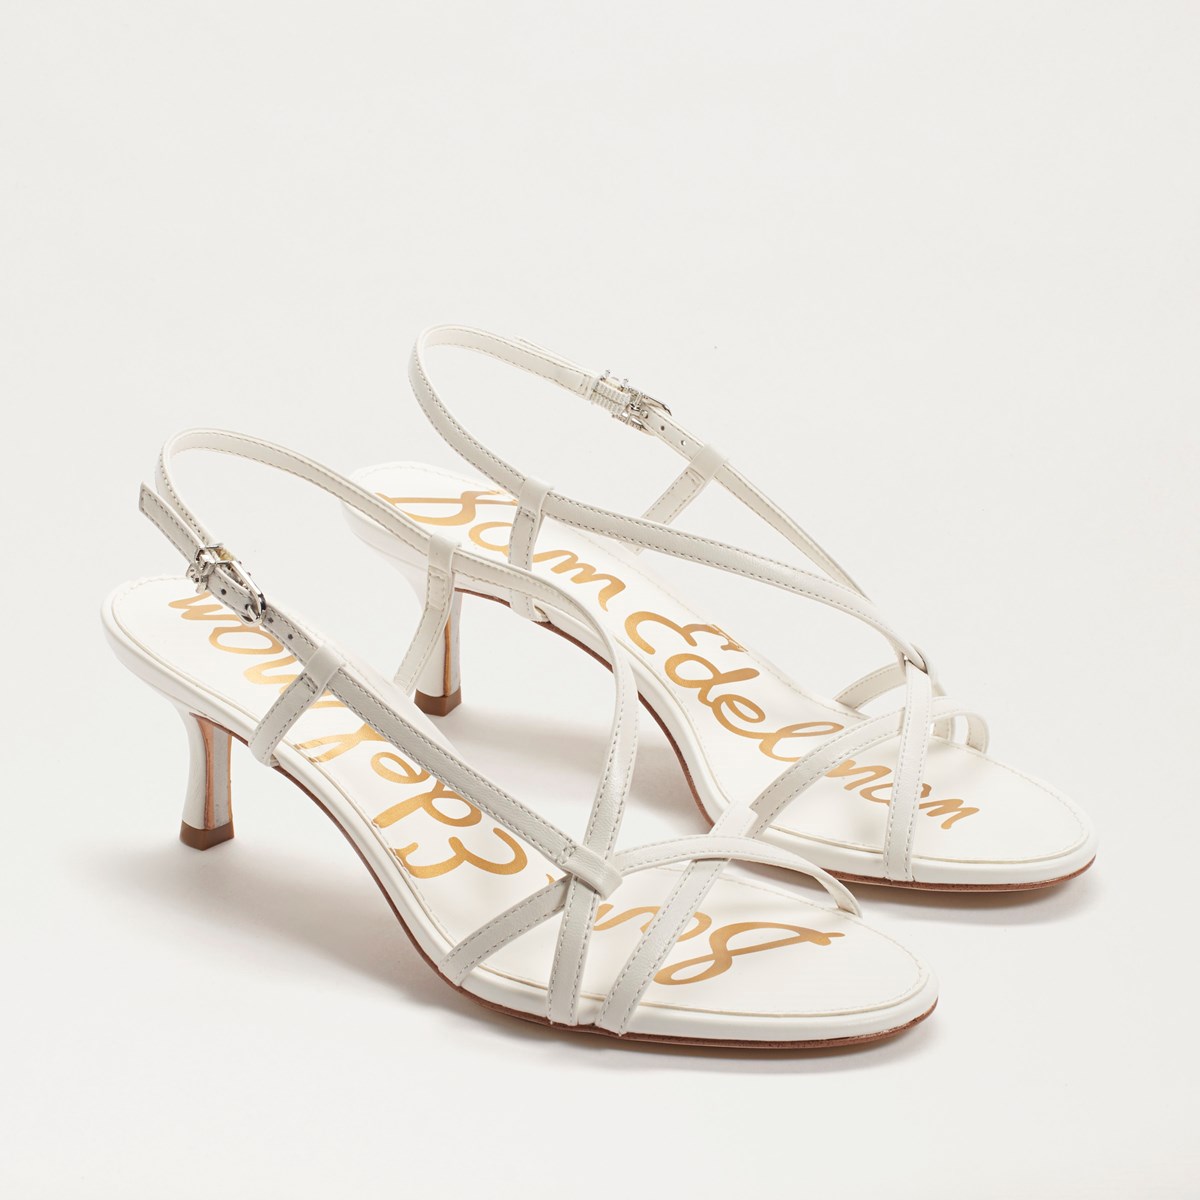 sam edelman bridal shoes